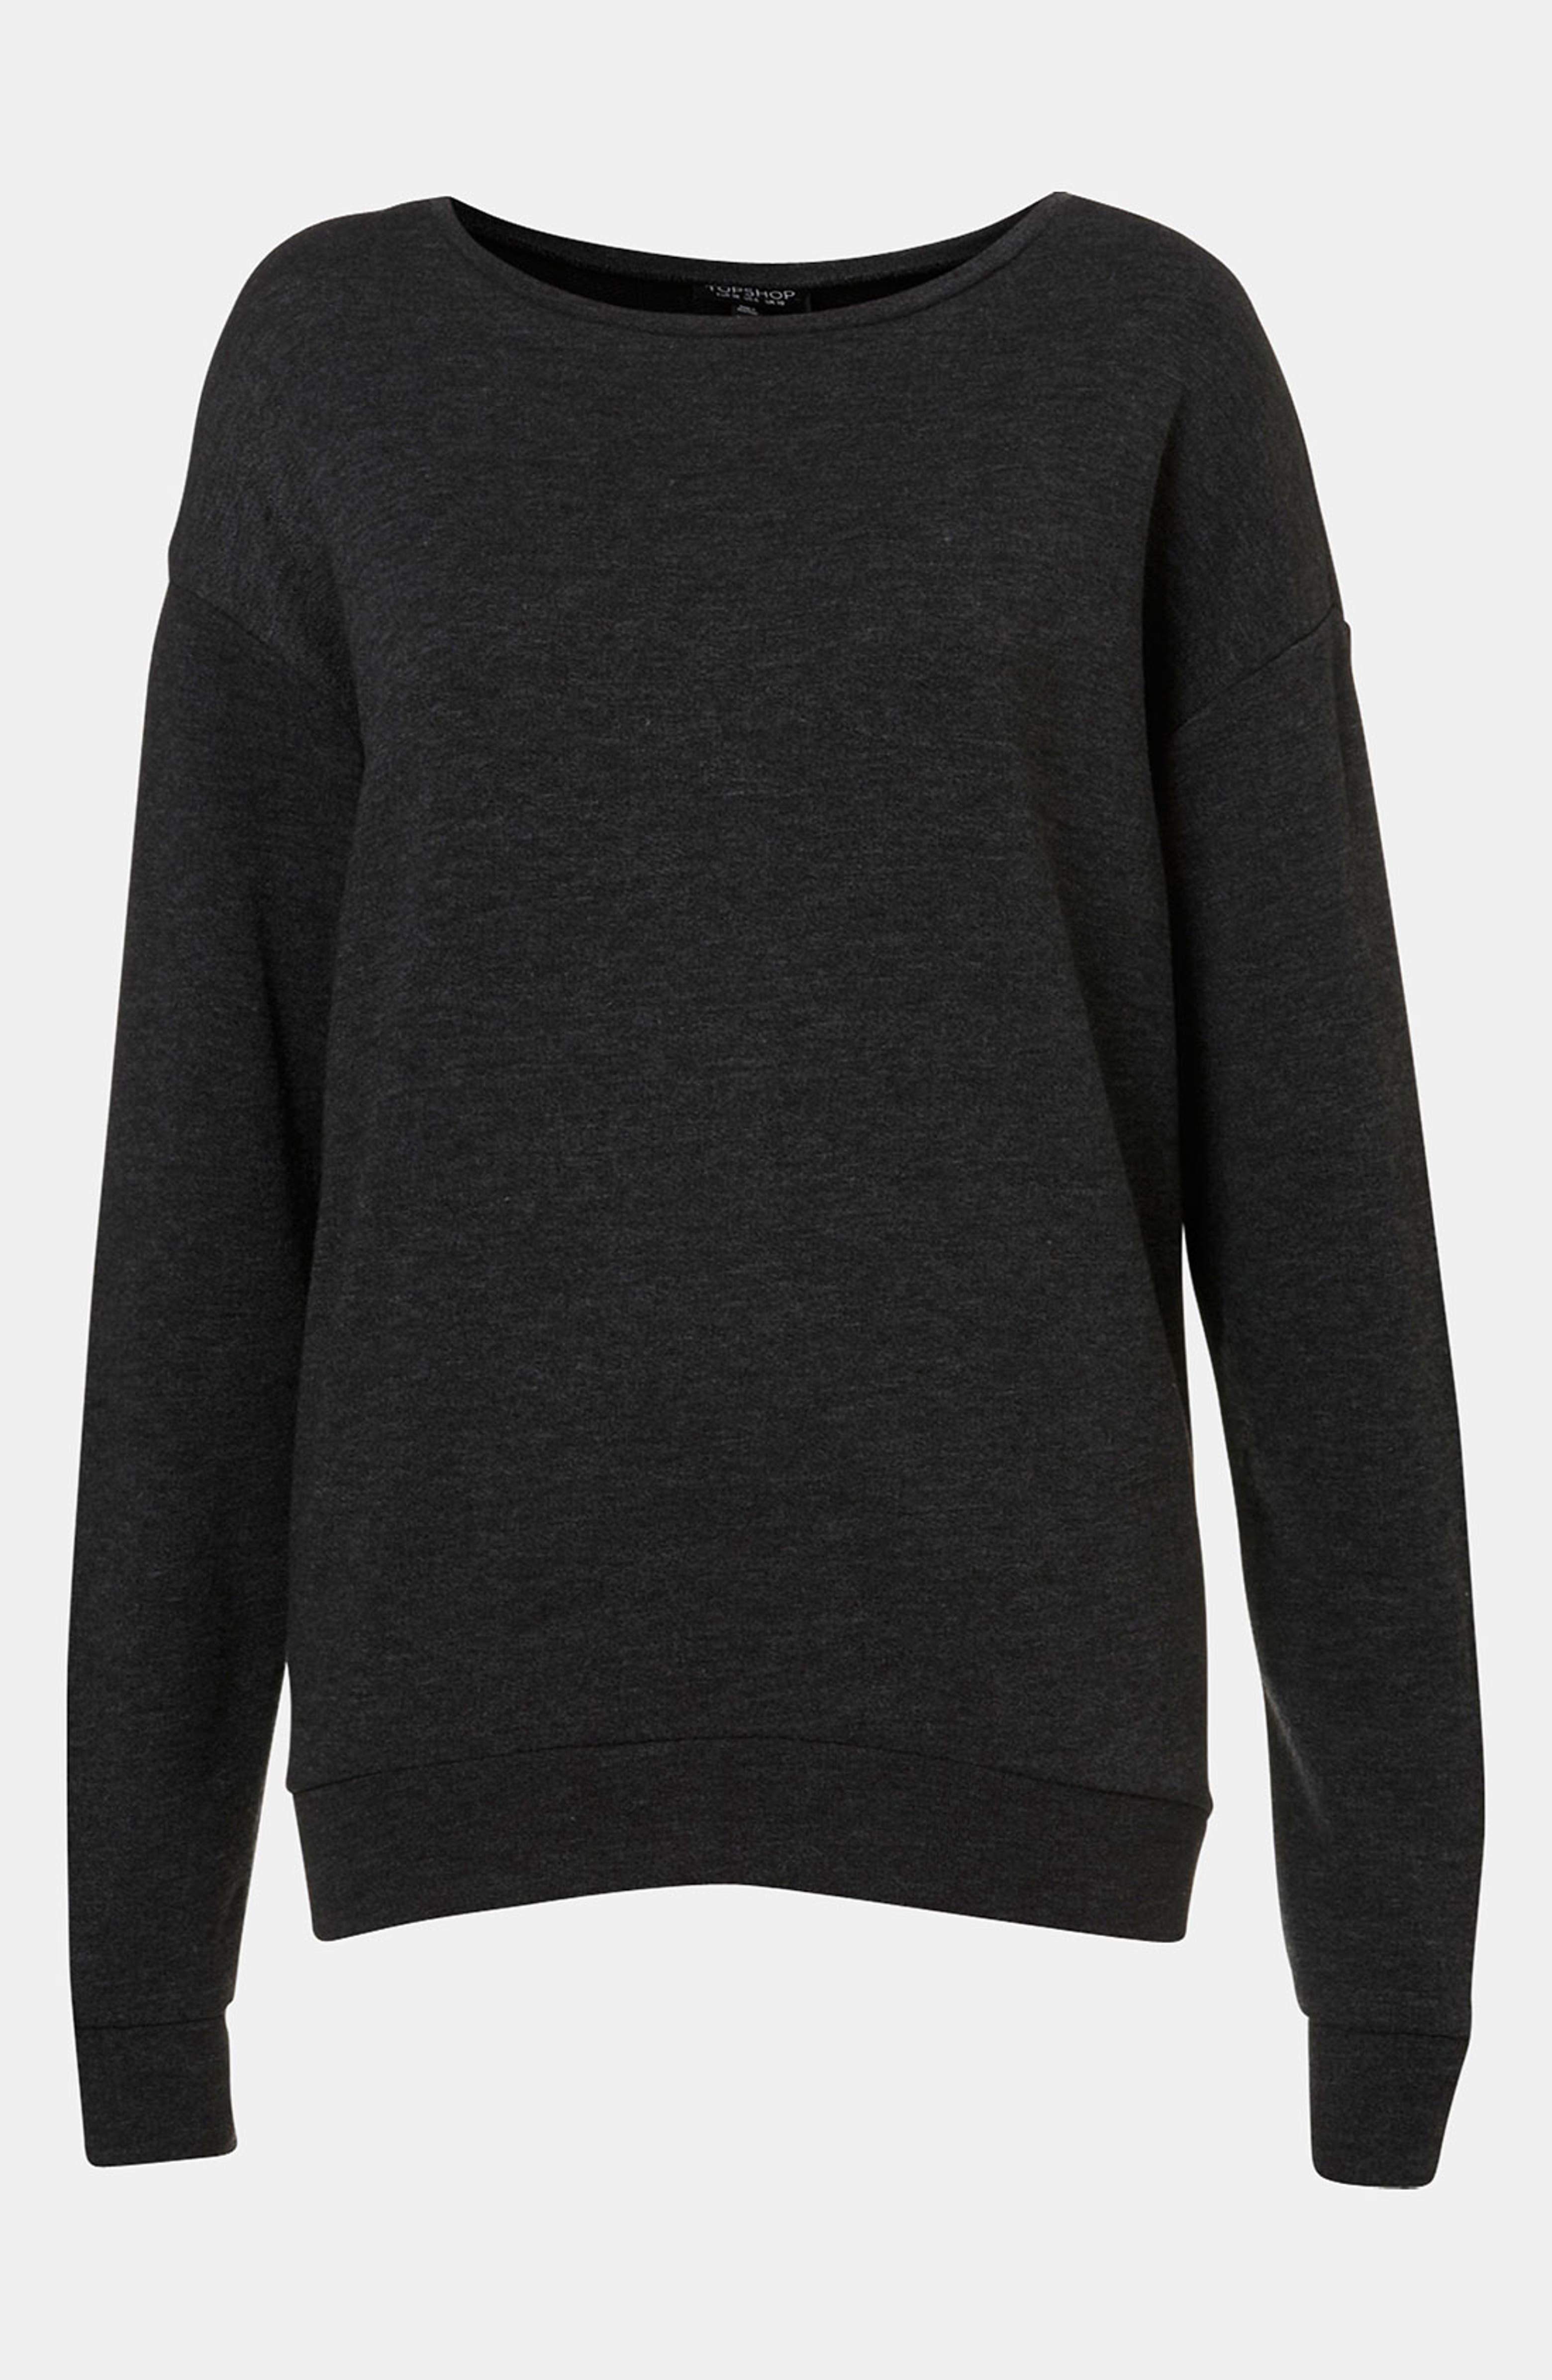 Topshop Slouchy Sweatshirt | Nordstrom